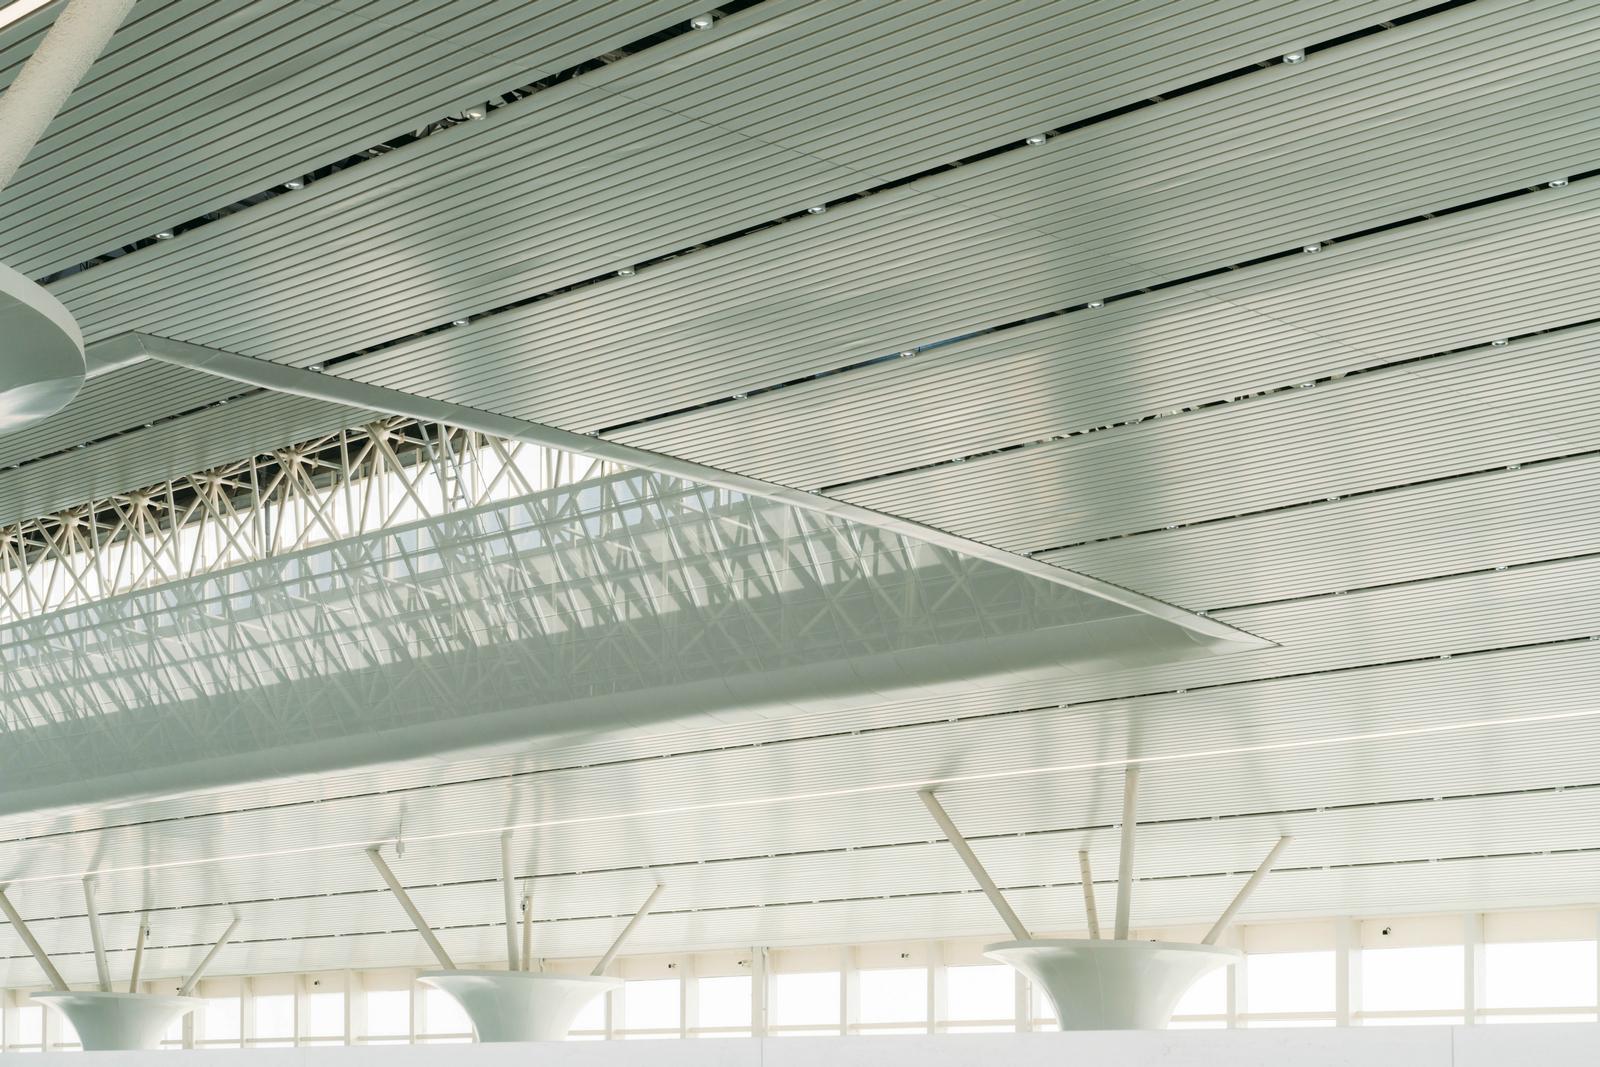 Roof design of North Finger Corridor of Jinan Yaoqiang International Airport(图15)